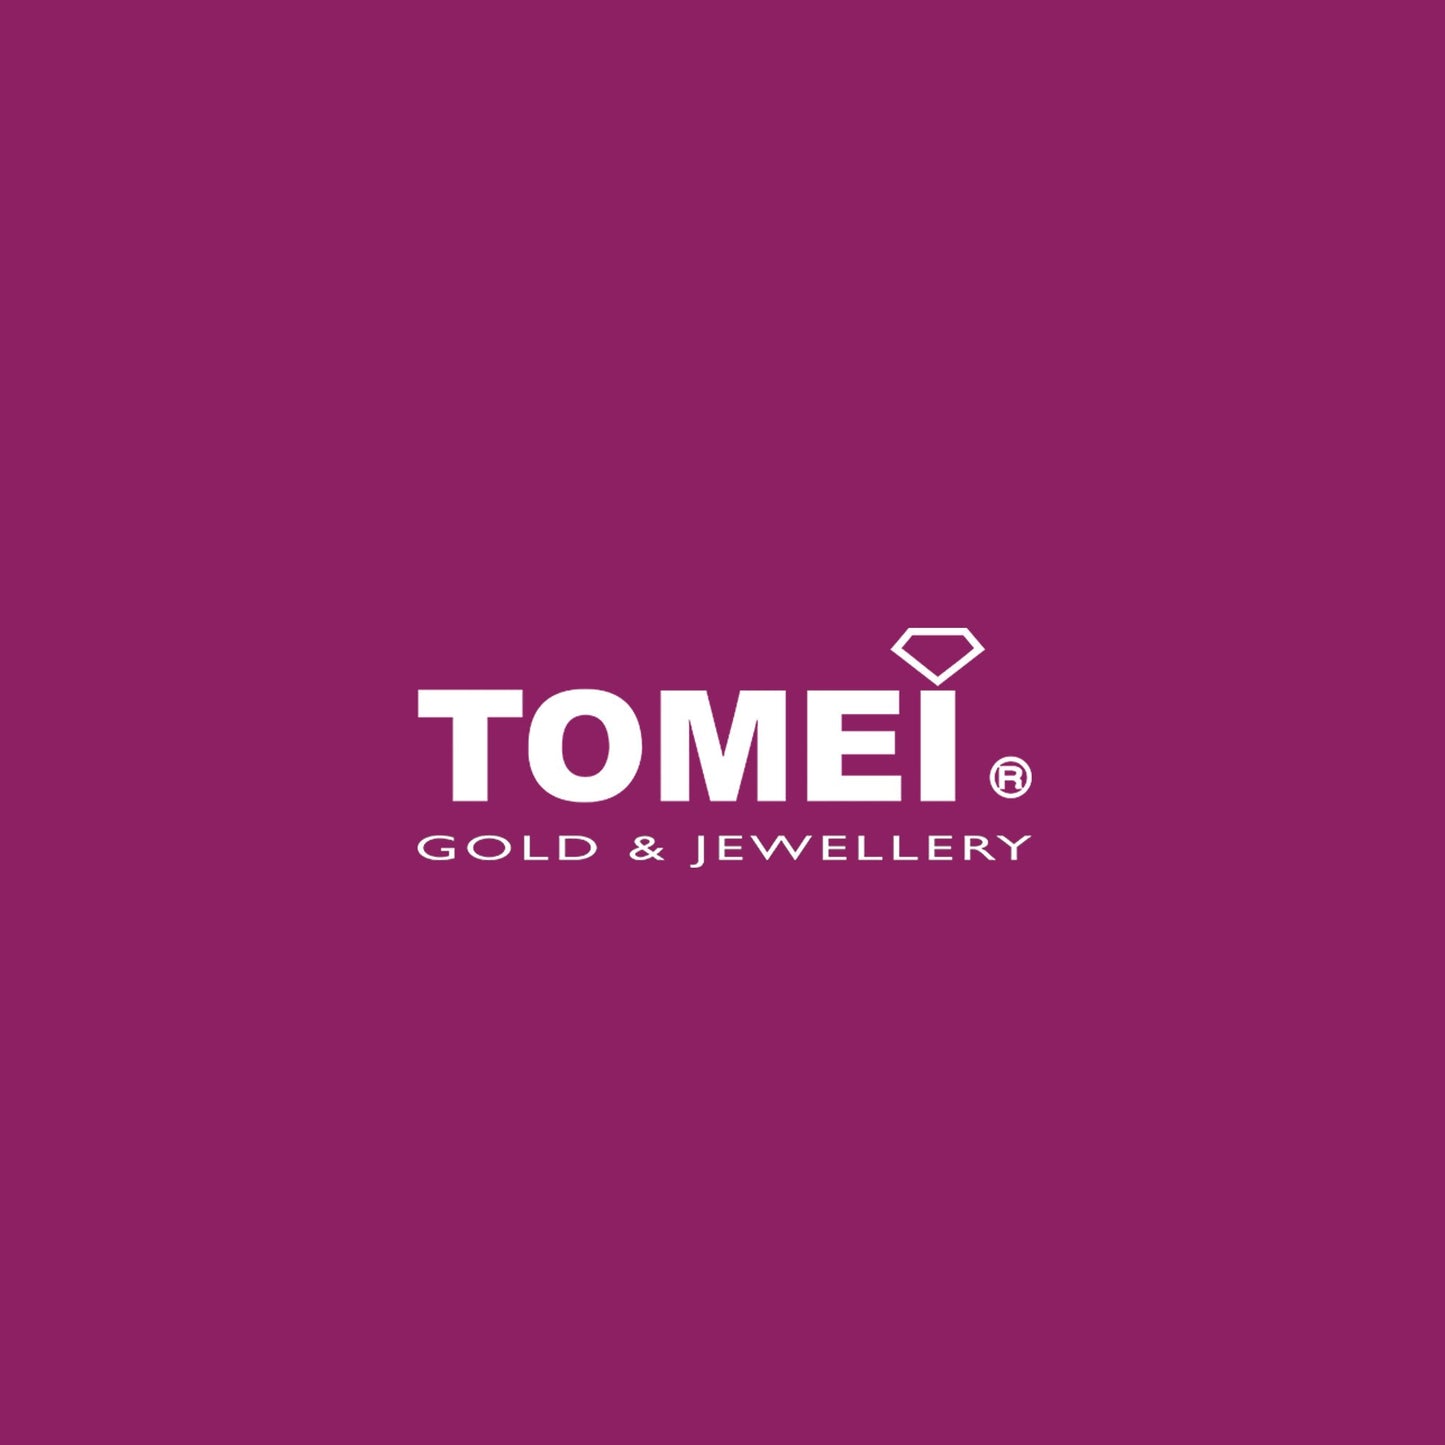 TOMEI Pearlfect Love Earrings(7mm), Rose Gold 750